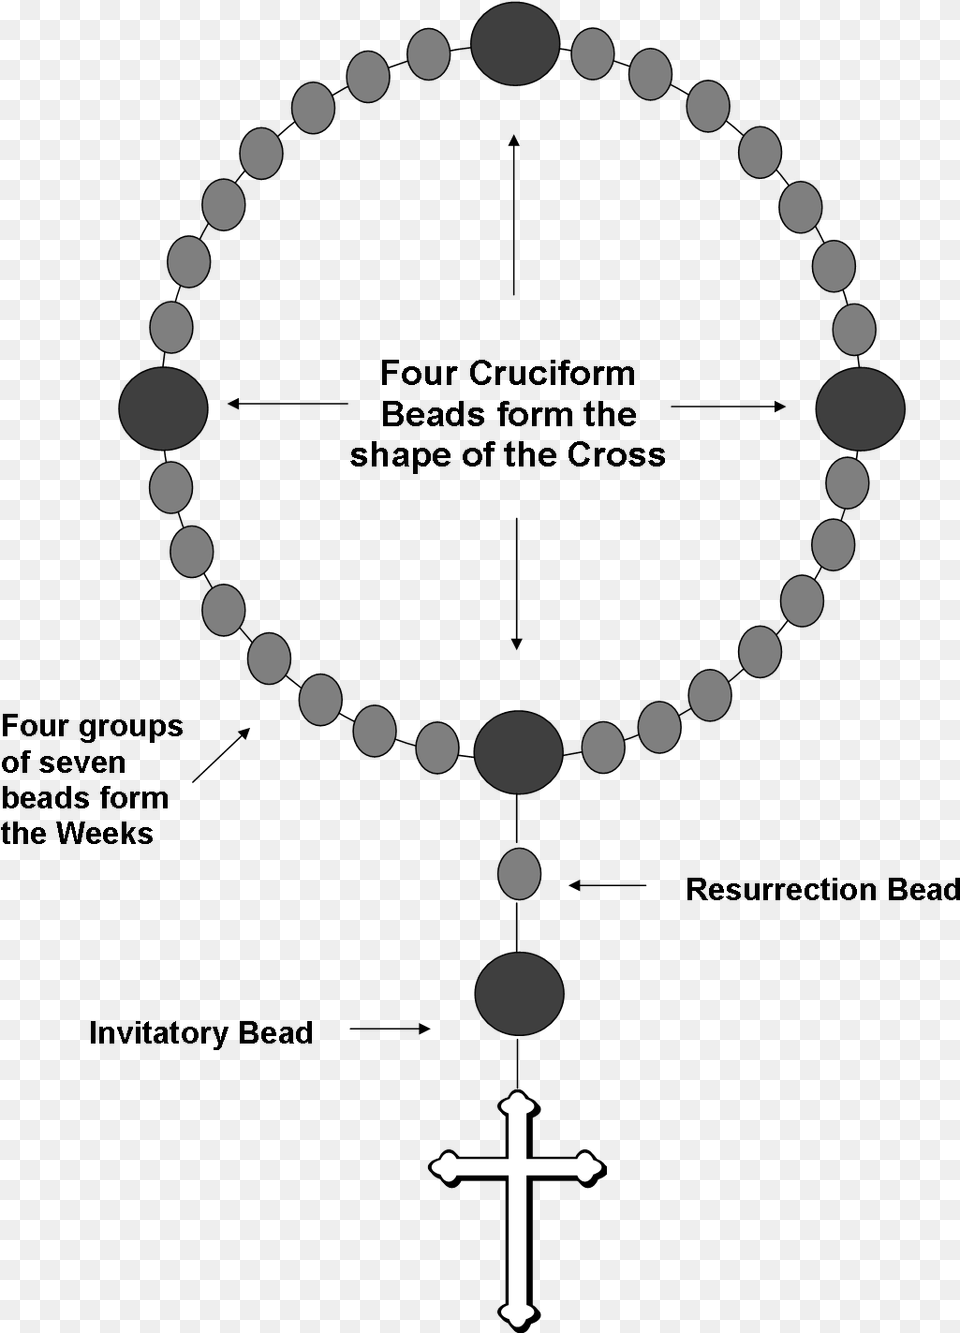 Prayer Bead Diagram With Resurrection Bead Make Christian Prayer Beads, Accessories, Cross, Symbol, Prayer Beads Free Png